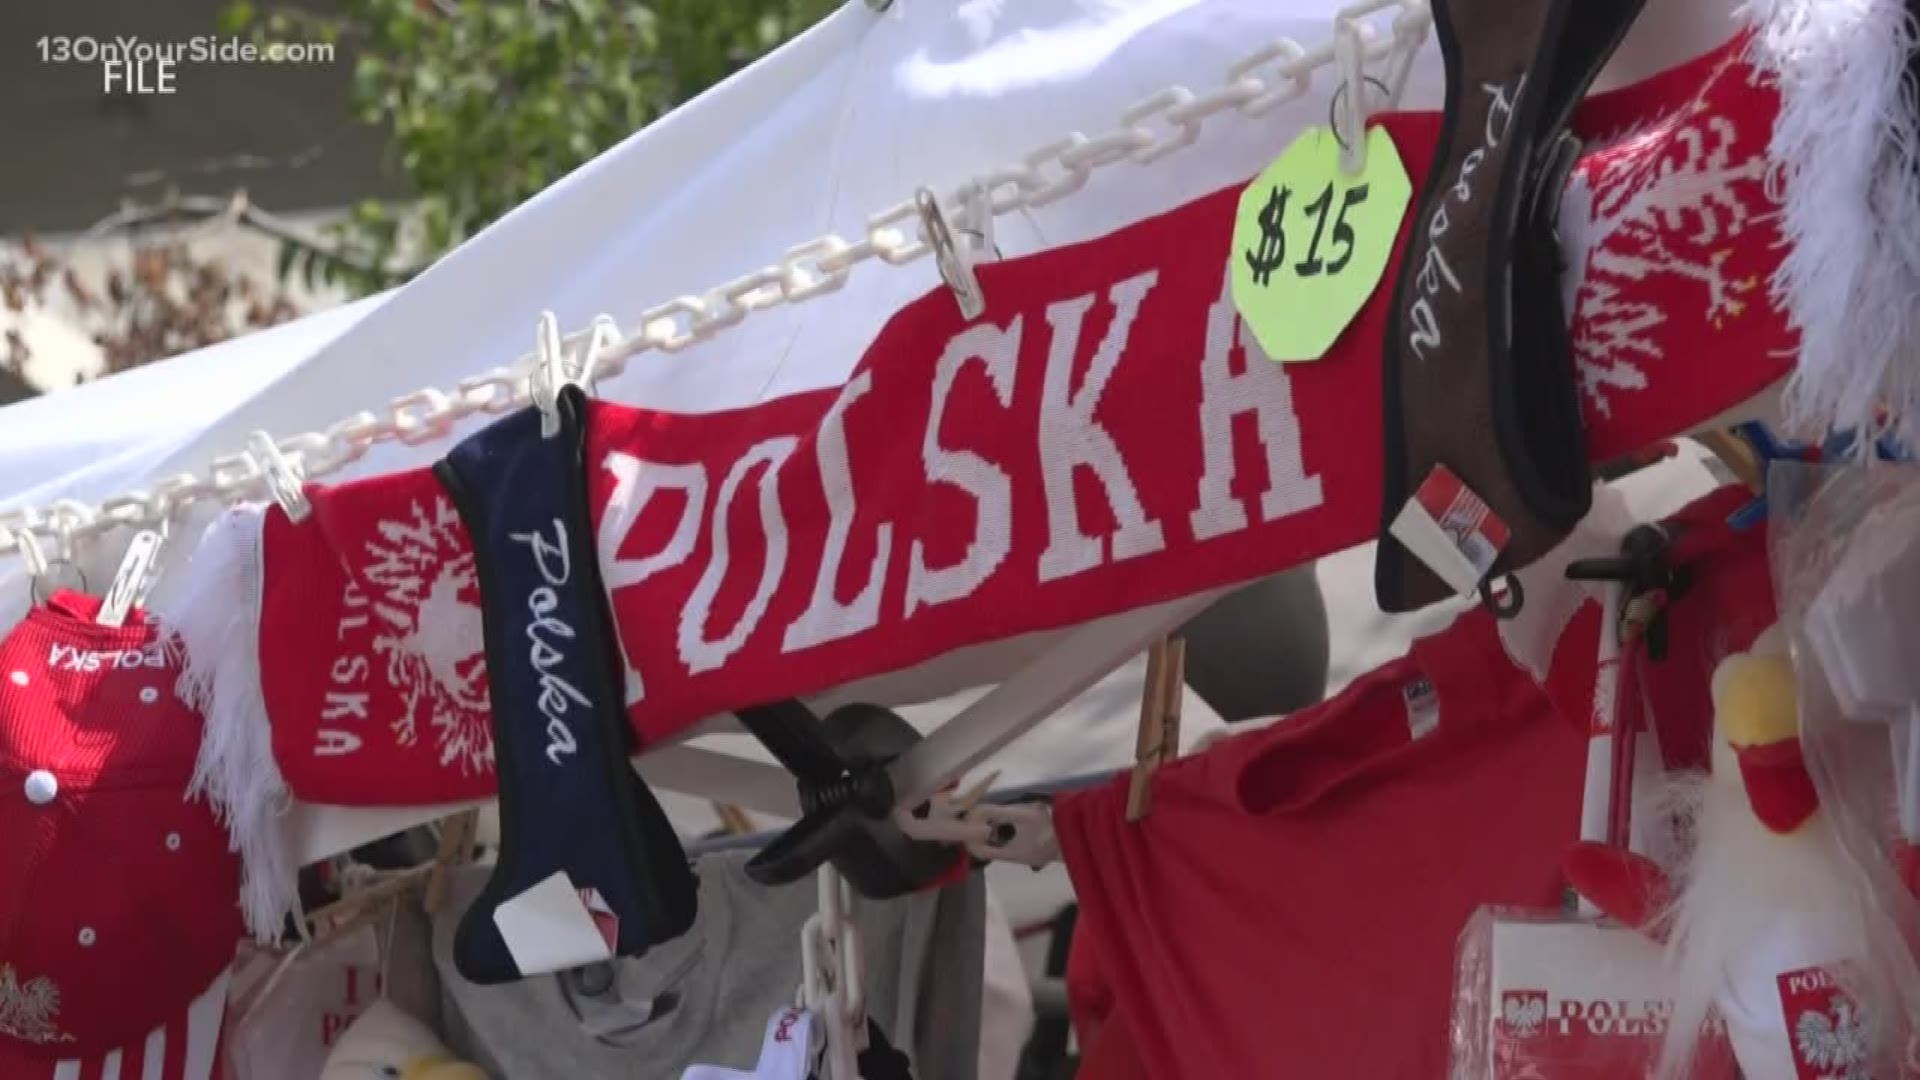 Polish Festival returns to Grand Rapids